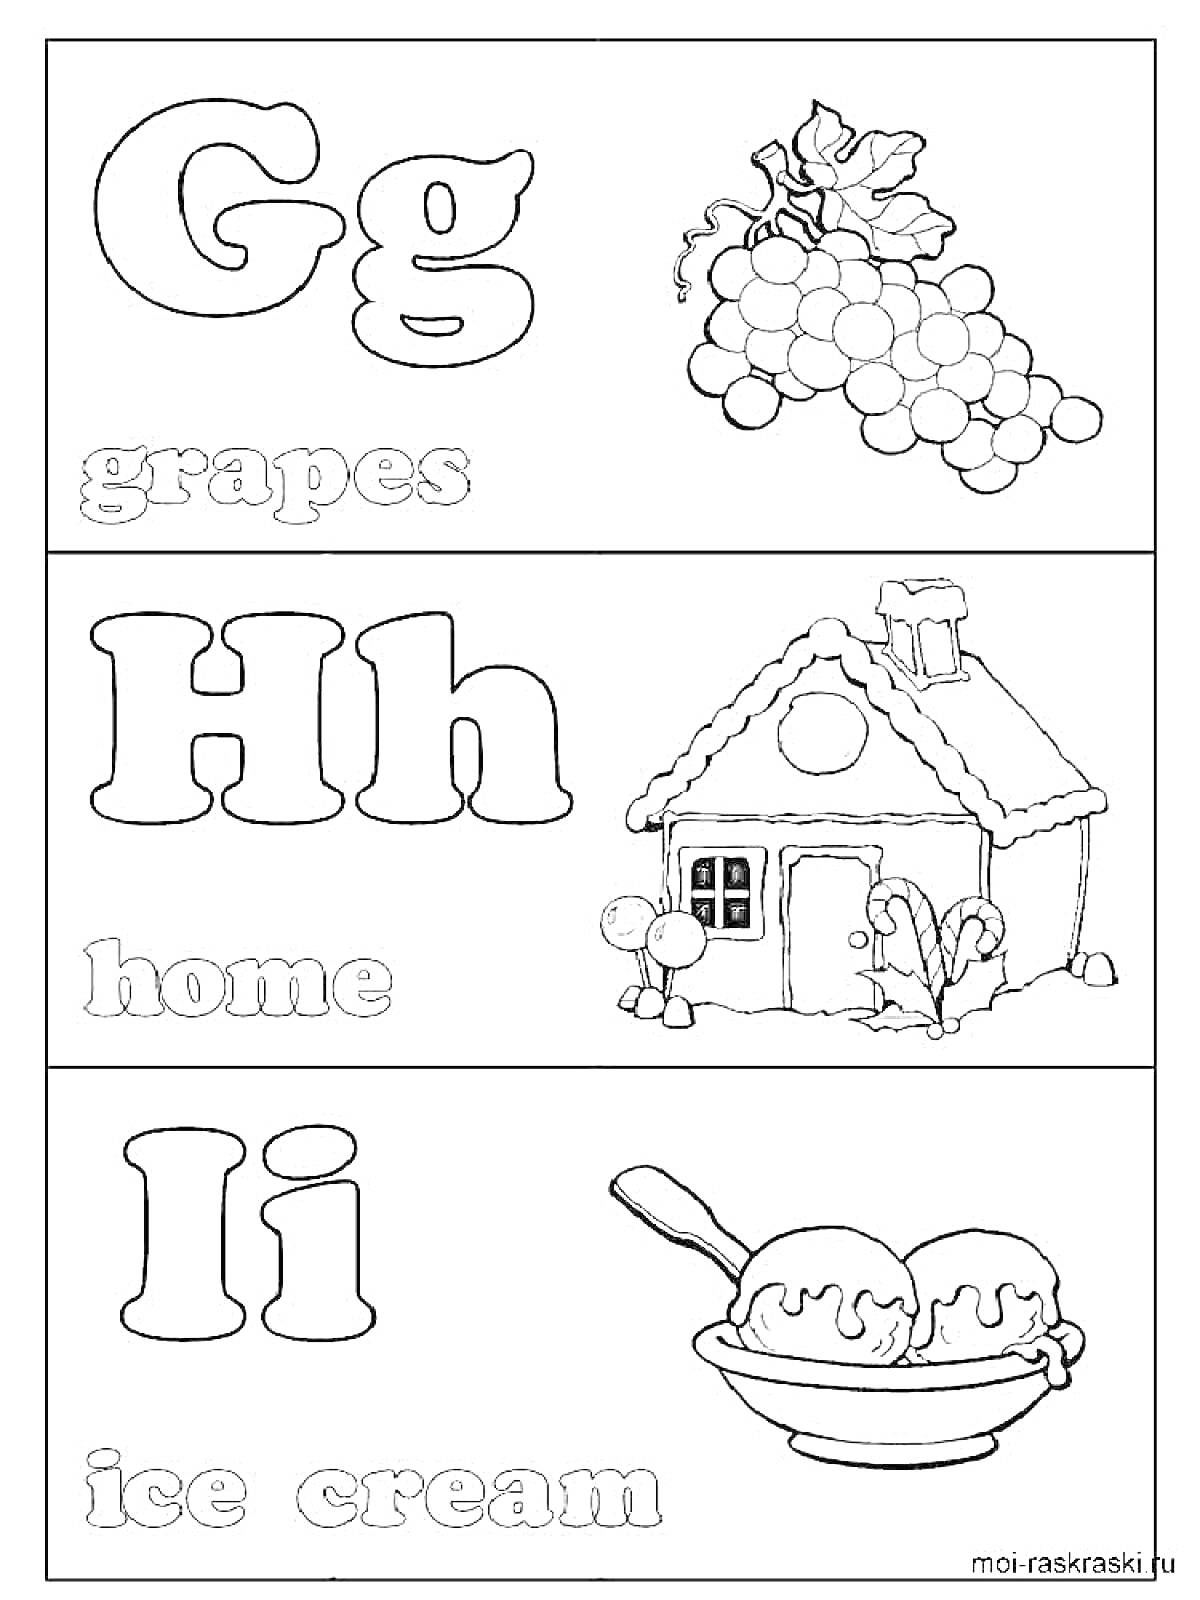 РаскраскаАнглийский алфавит: Gg - grapes, Hh - home, Ii - ice cream